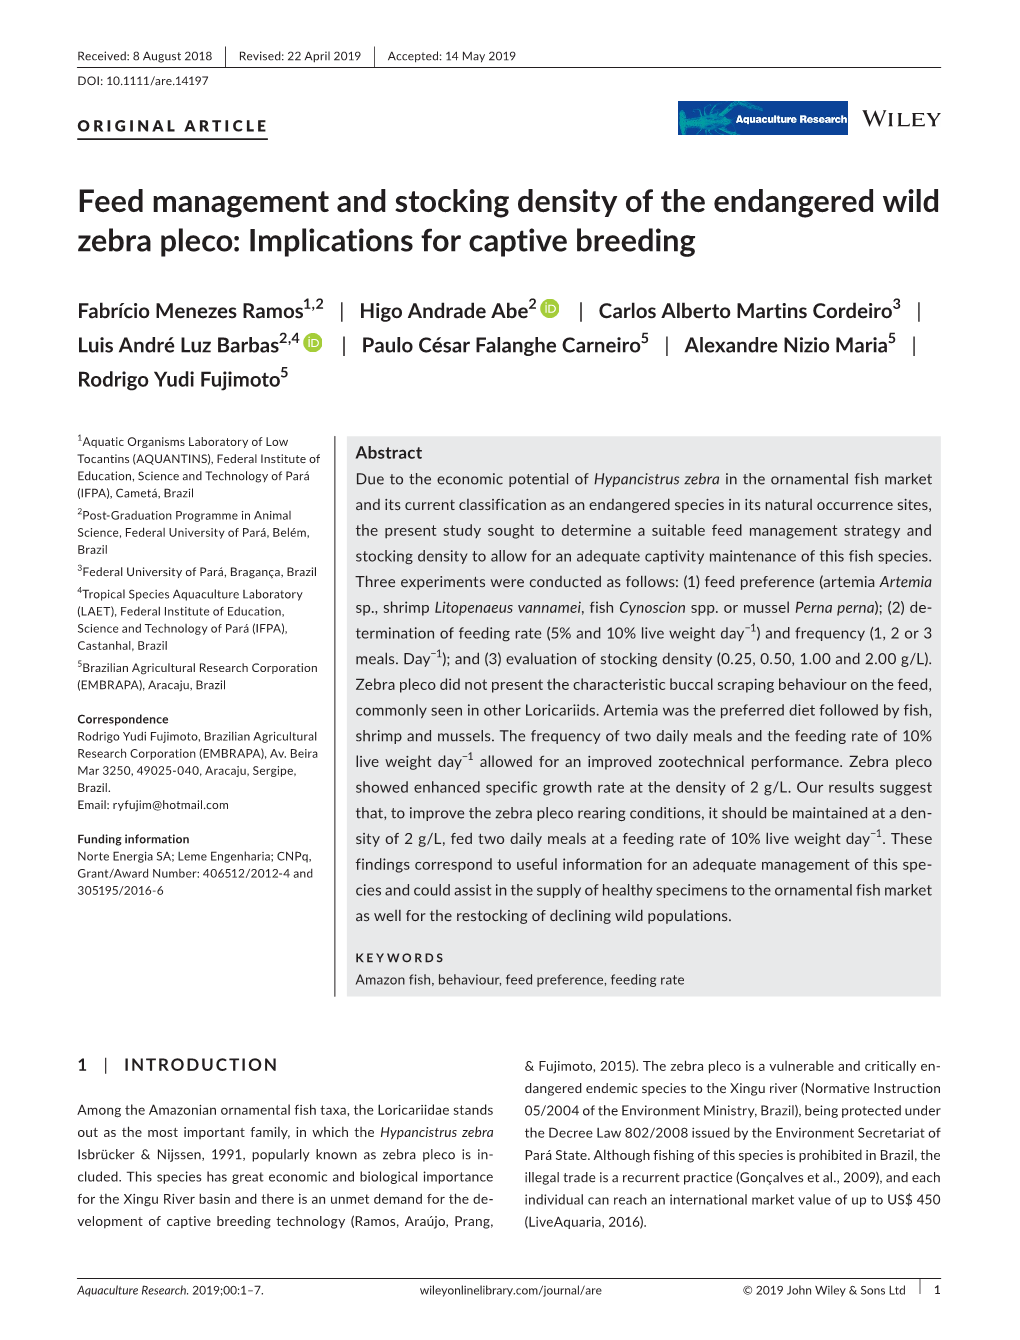 Feed Management and Stocking Density of the Endangered Wild Zebra Pleco: Implications for Captive Breeding